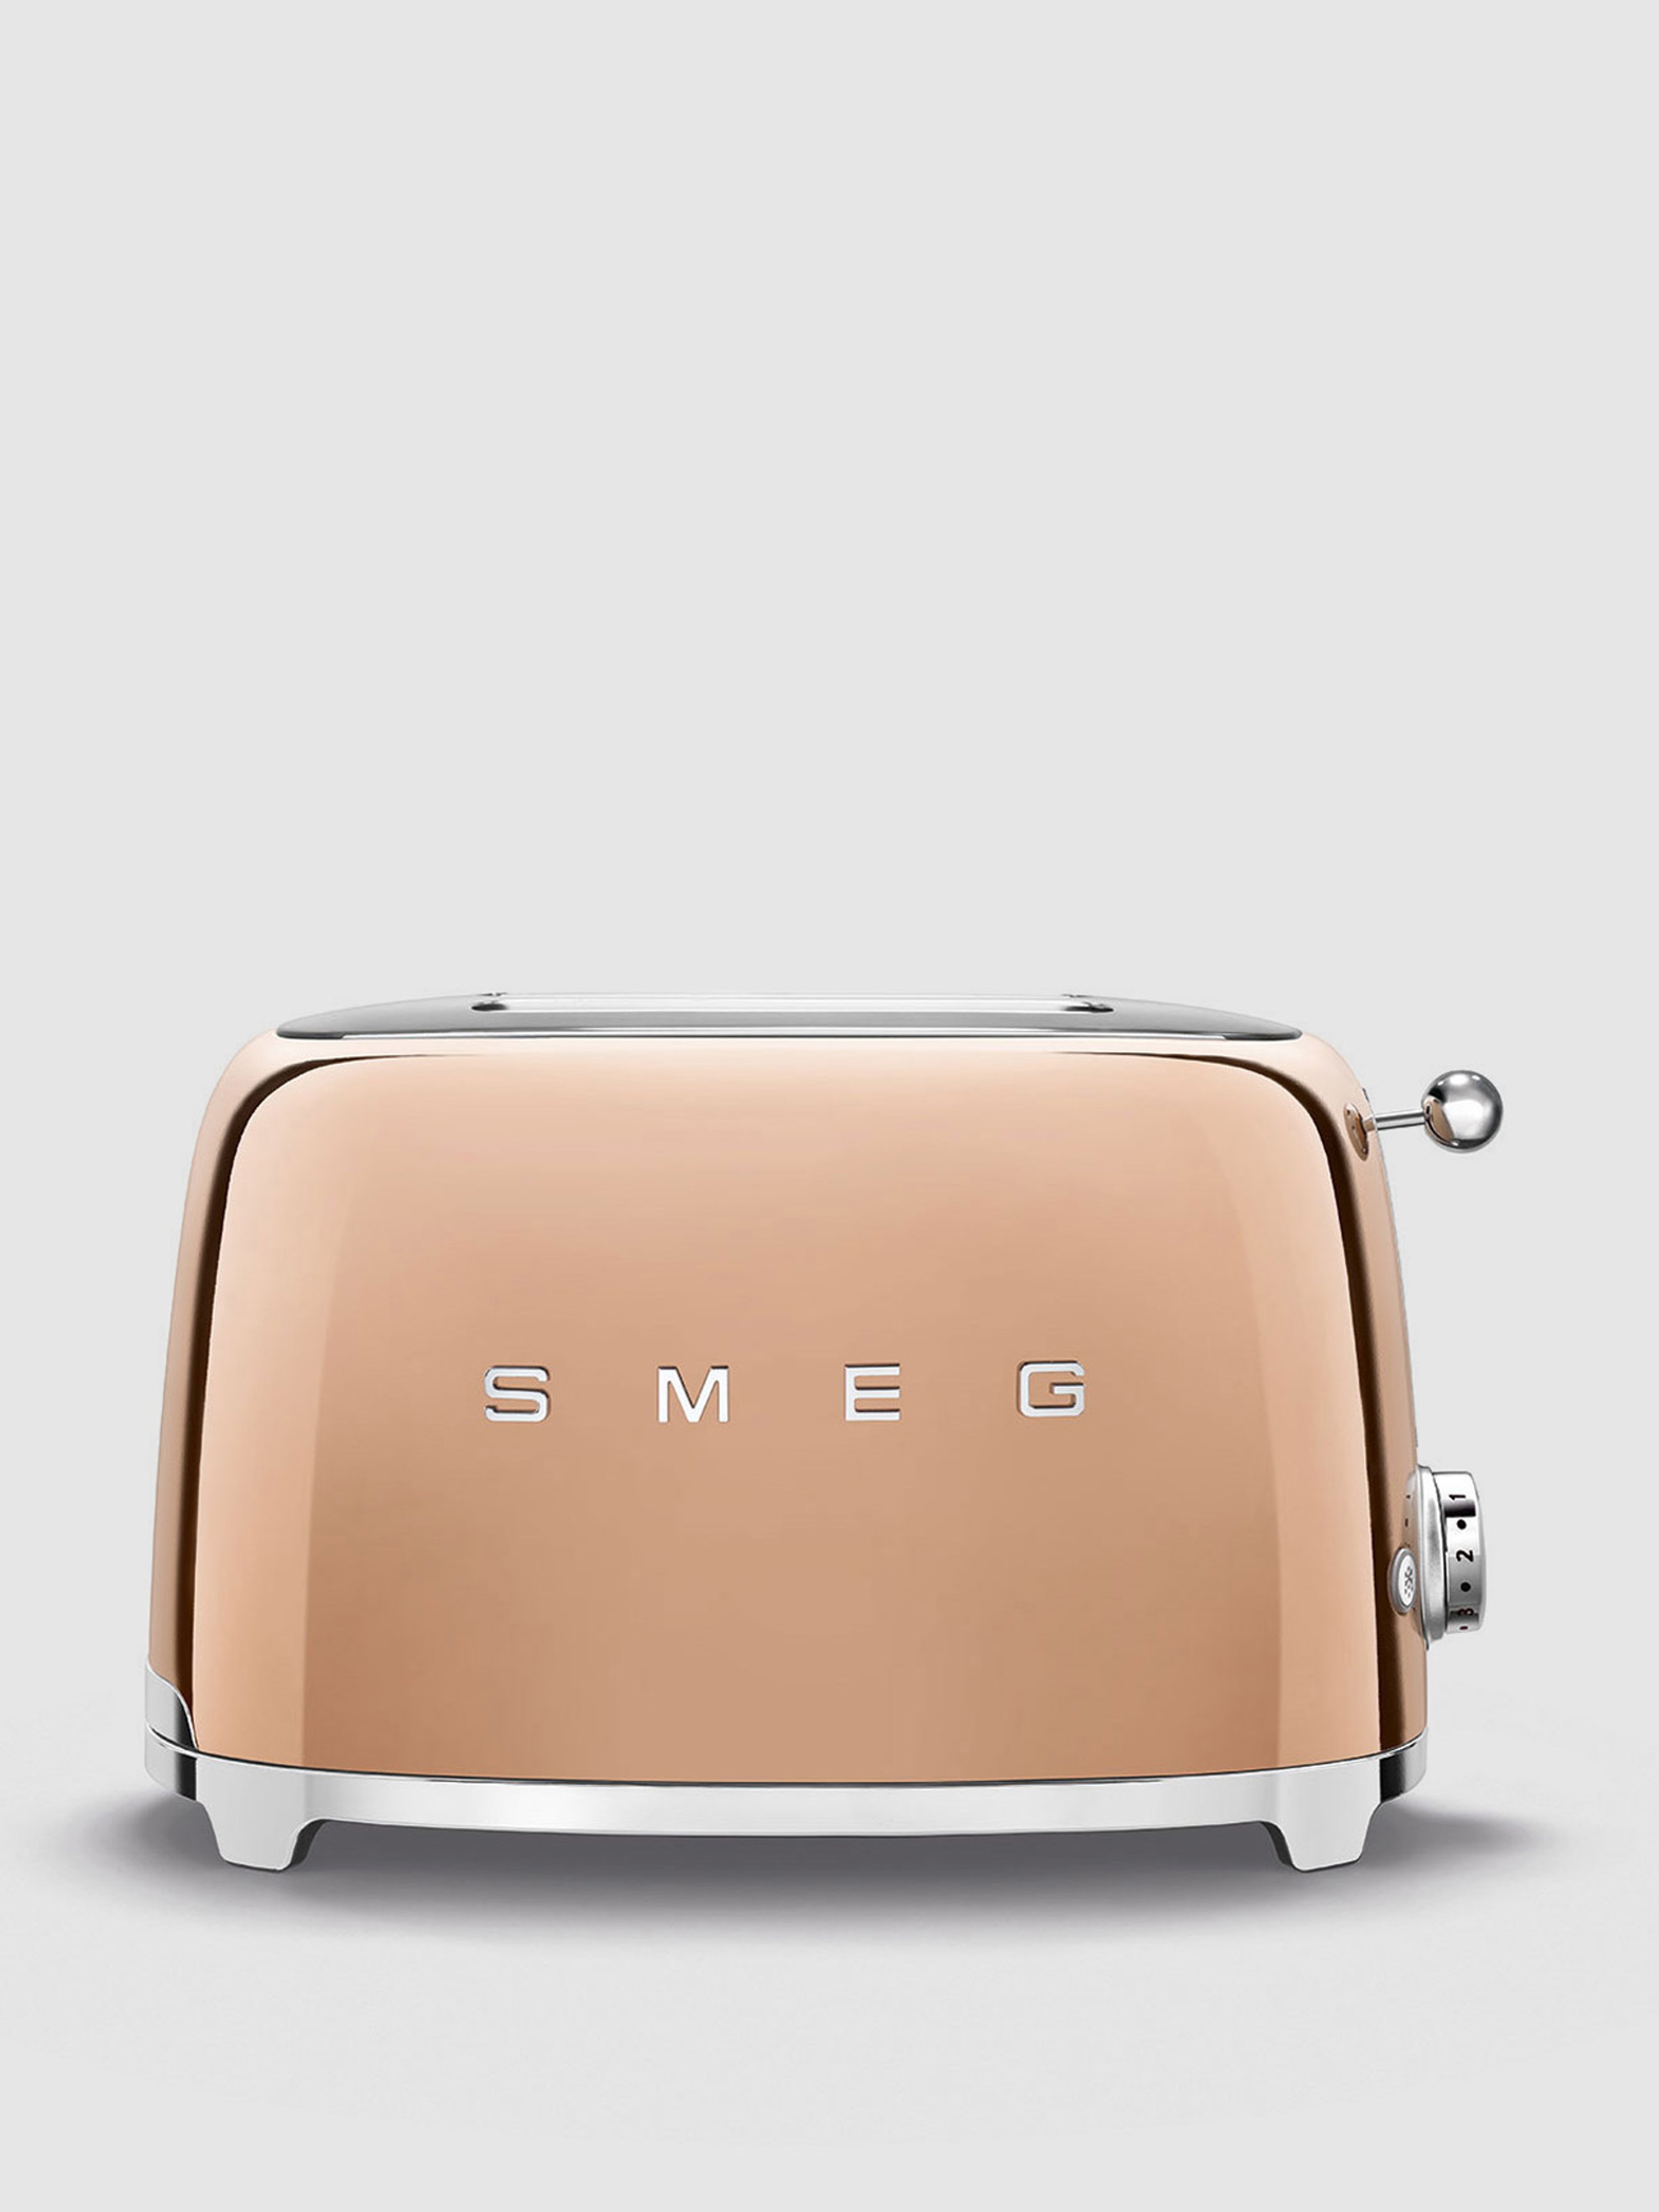 Smeg 2-slice Toaster In Rose Gold